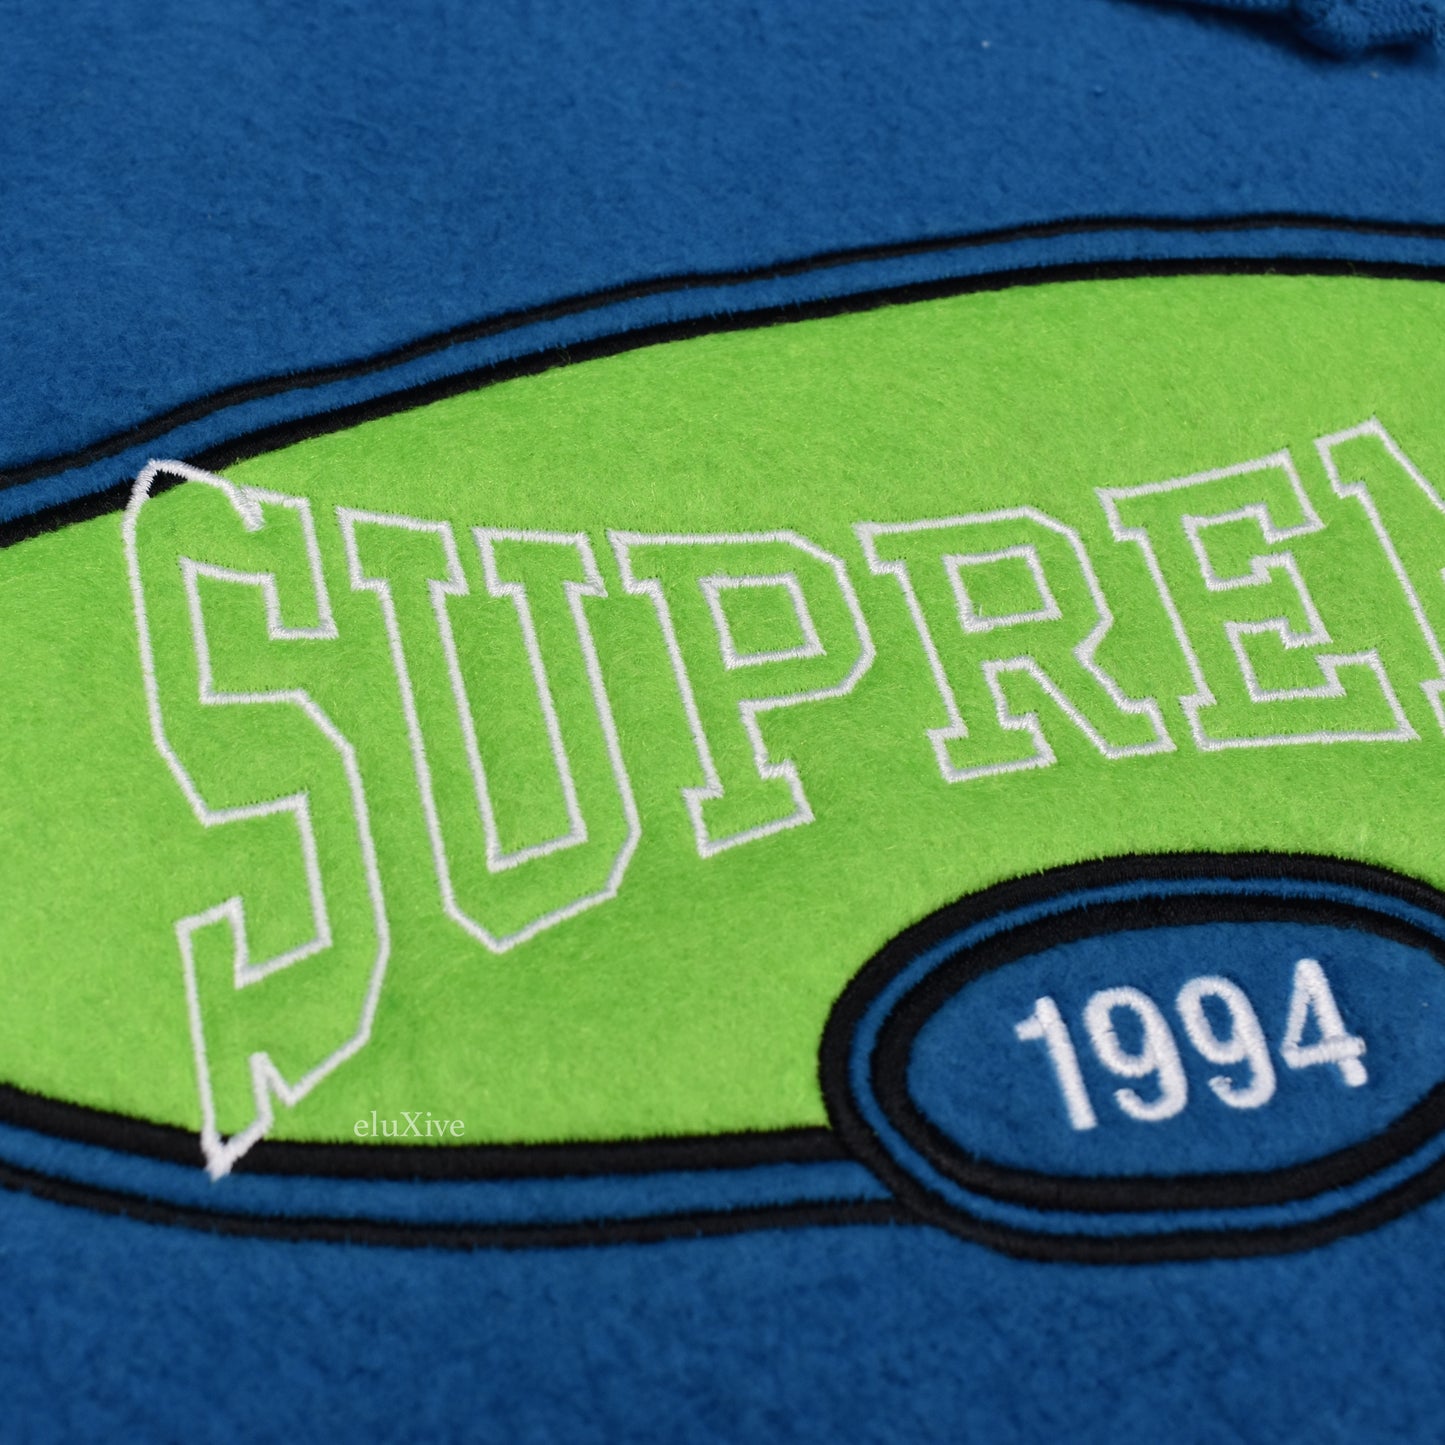 Supreme - Aqua Reverse Fleece Logo Hoodie